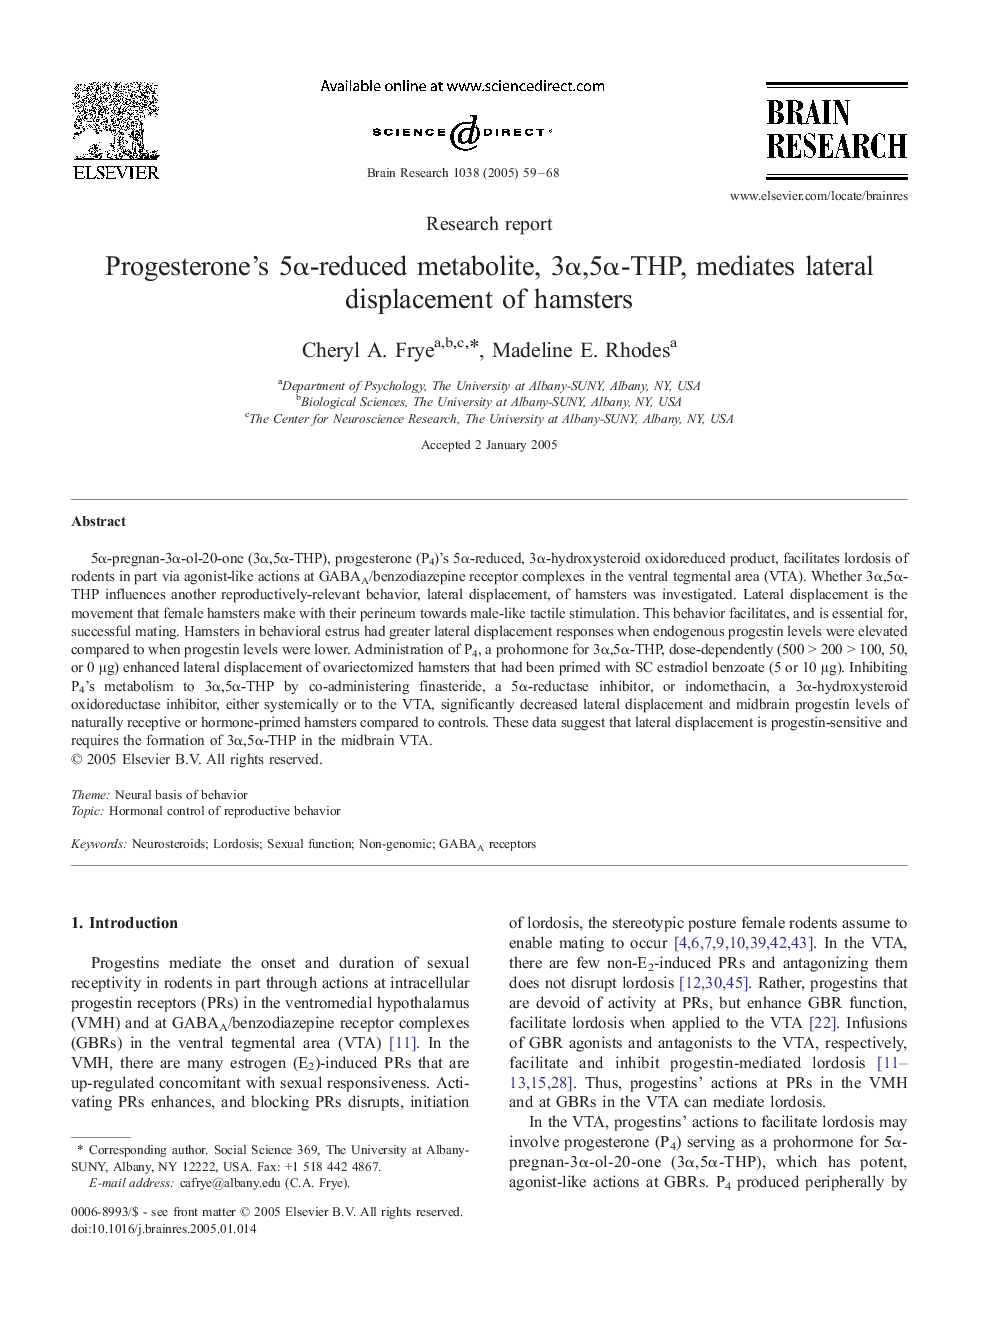 Progesterone's 5Î±-reduced metabolite, 3Î±,5Î±-THP, mediates lateral displacement of hamsters